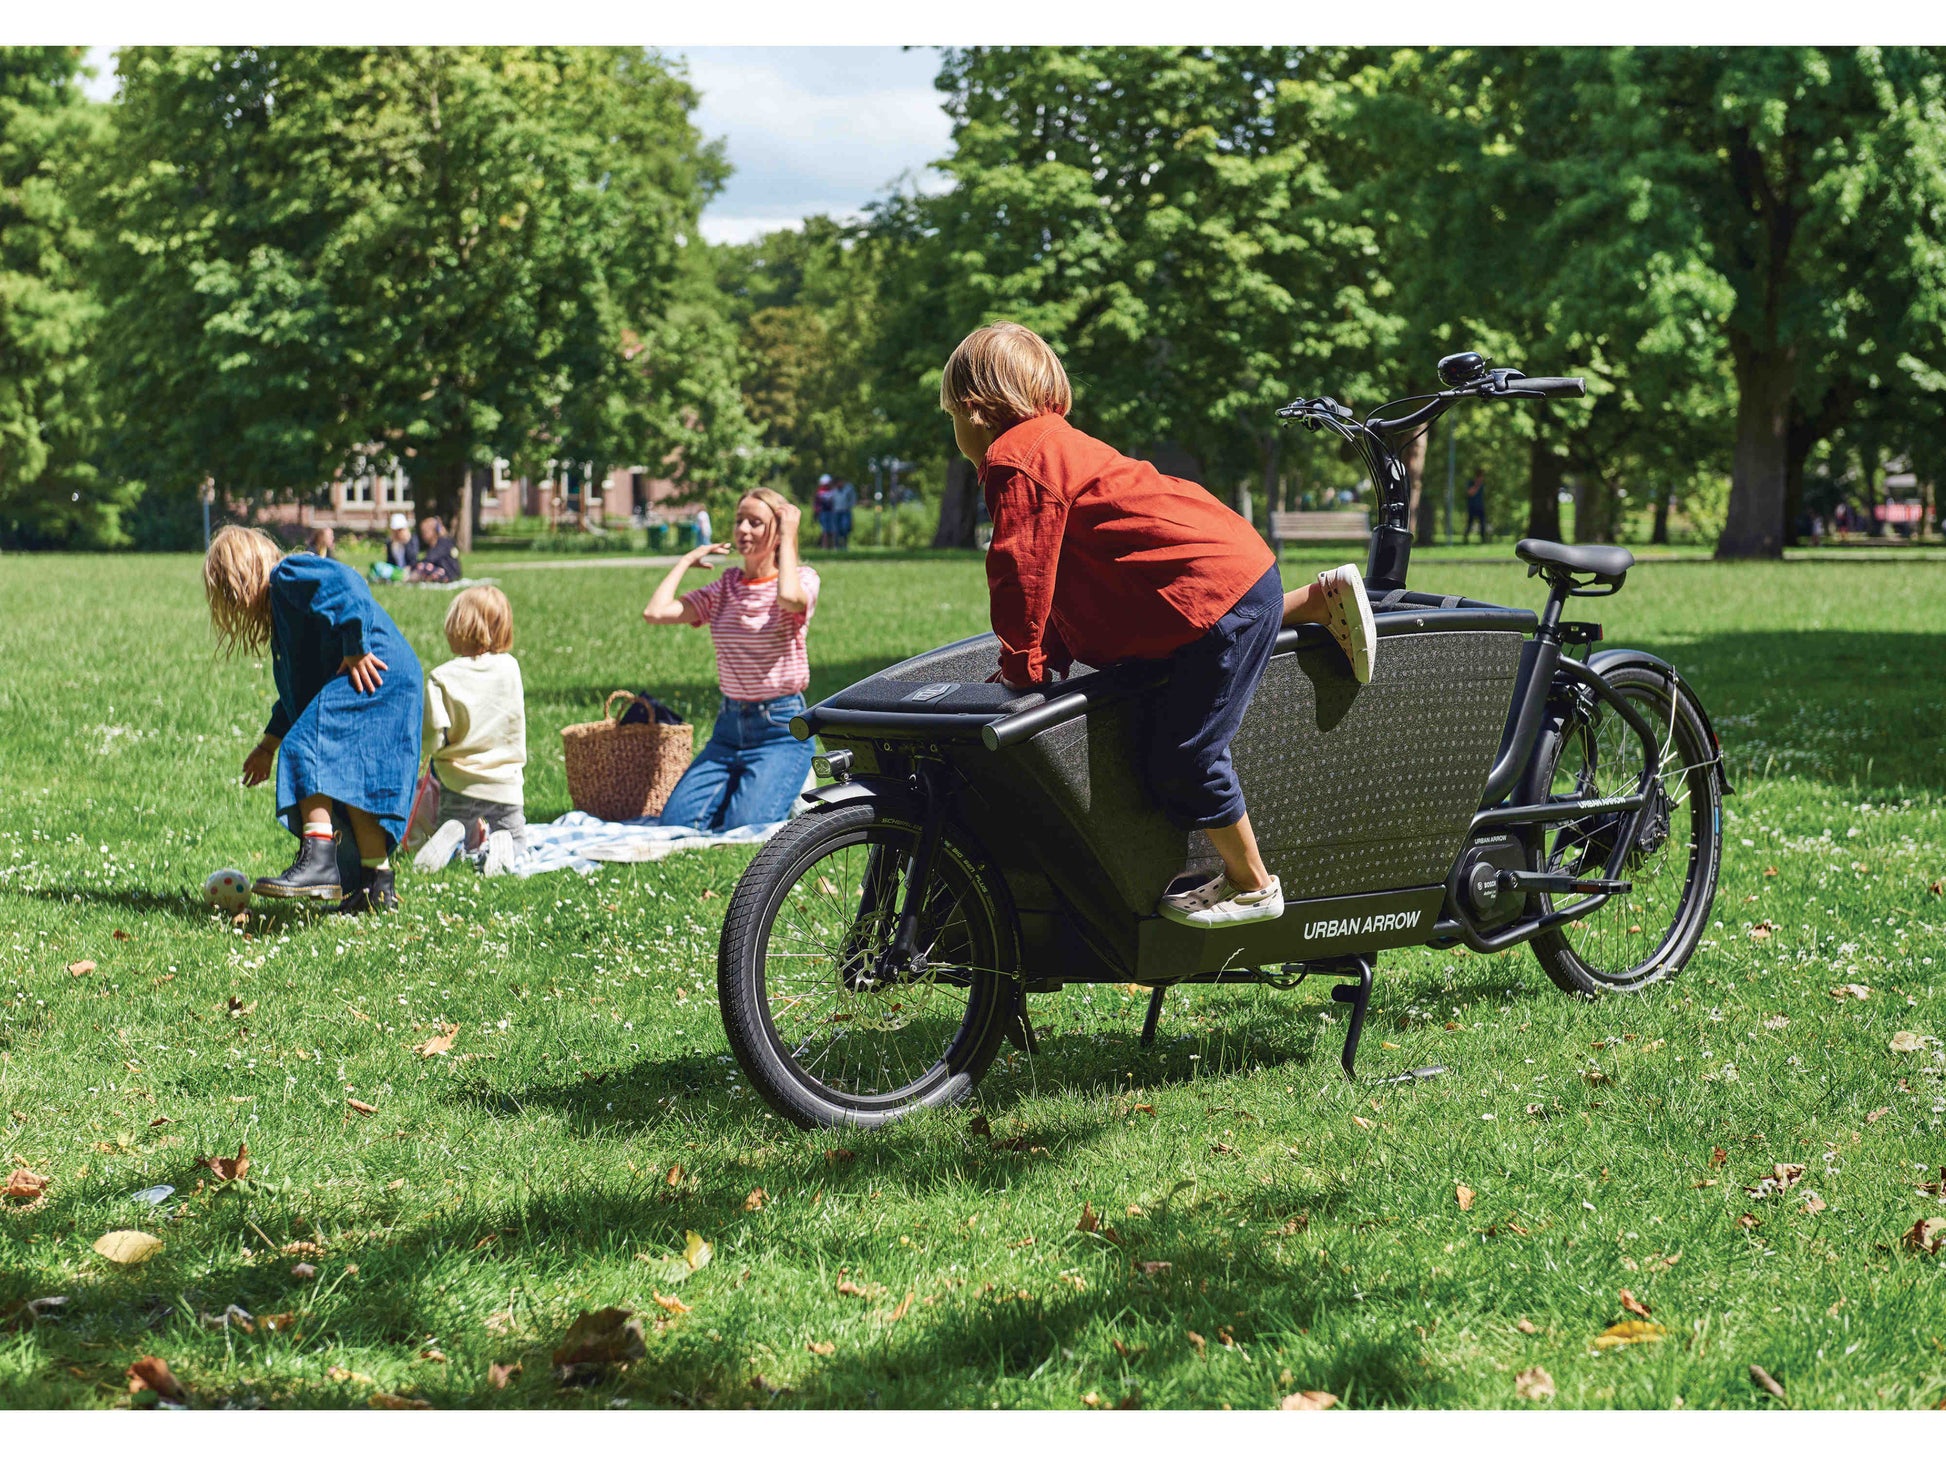 Urban Arrow Family Performance cargo electric bike family picnic in park